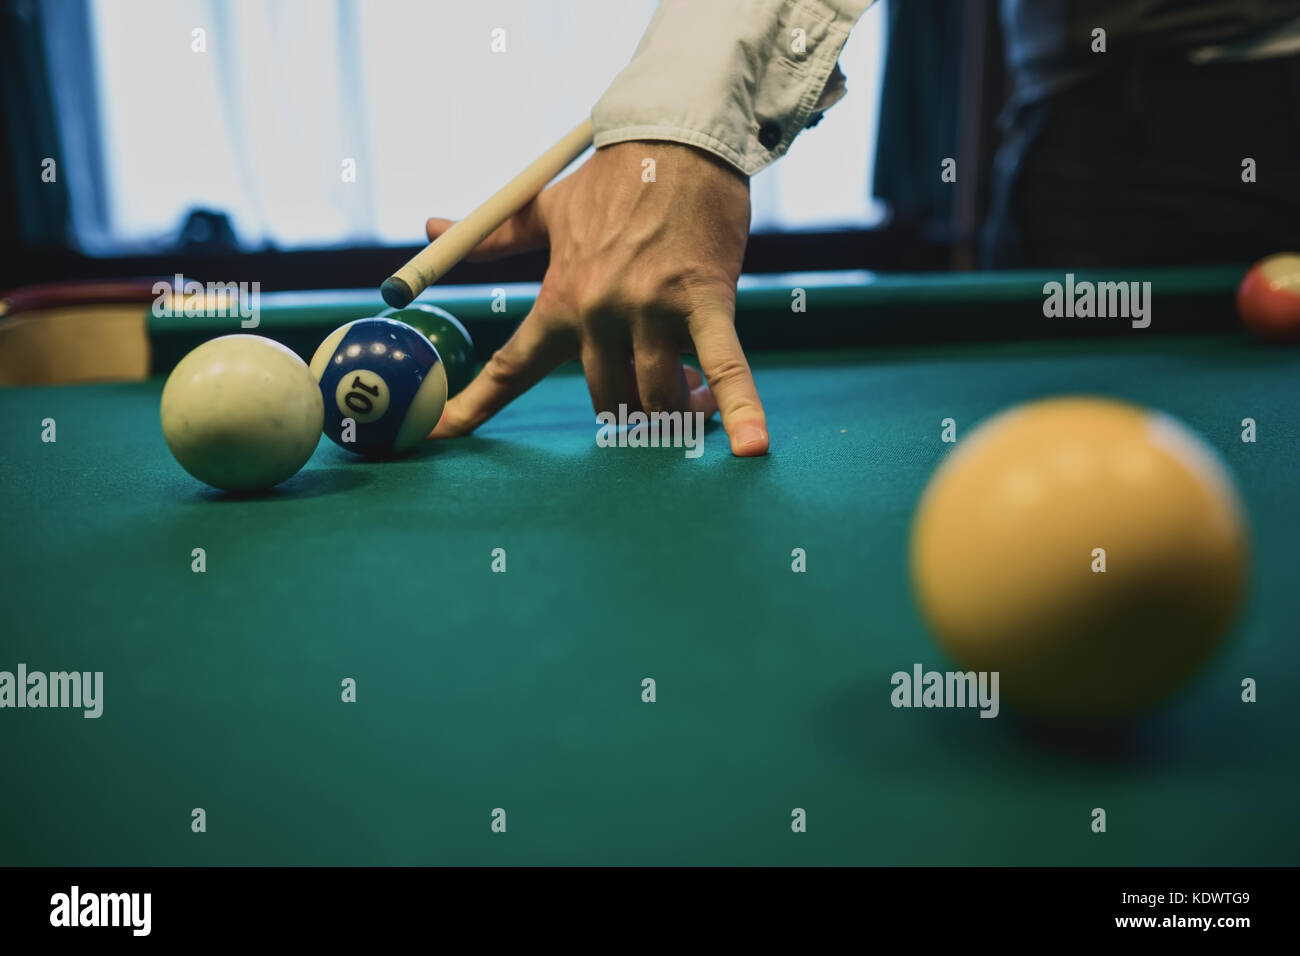 American billiard. Man playing billiard, snooker. Player preparing to shoot, hitting the cue ball. Stock Photo